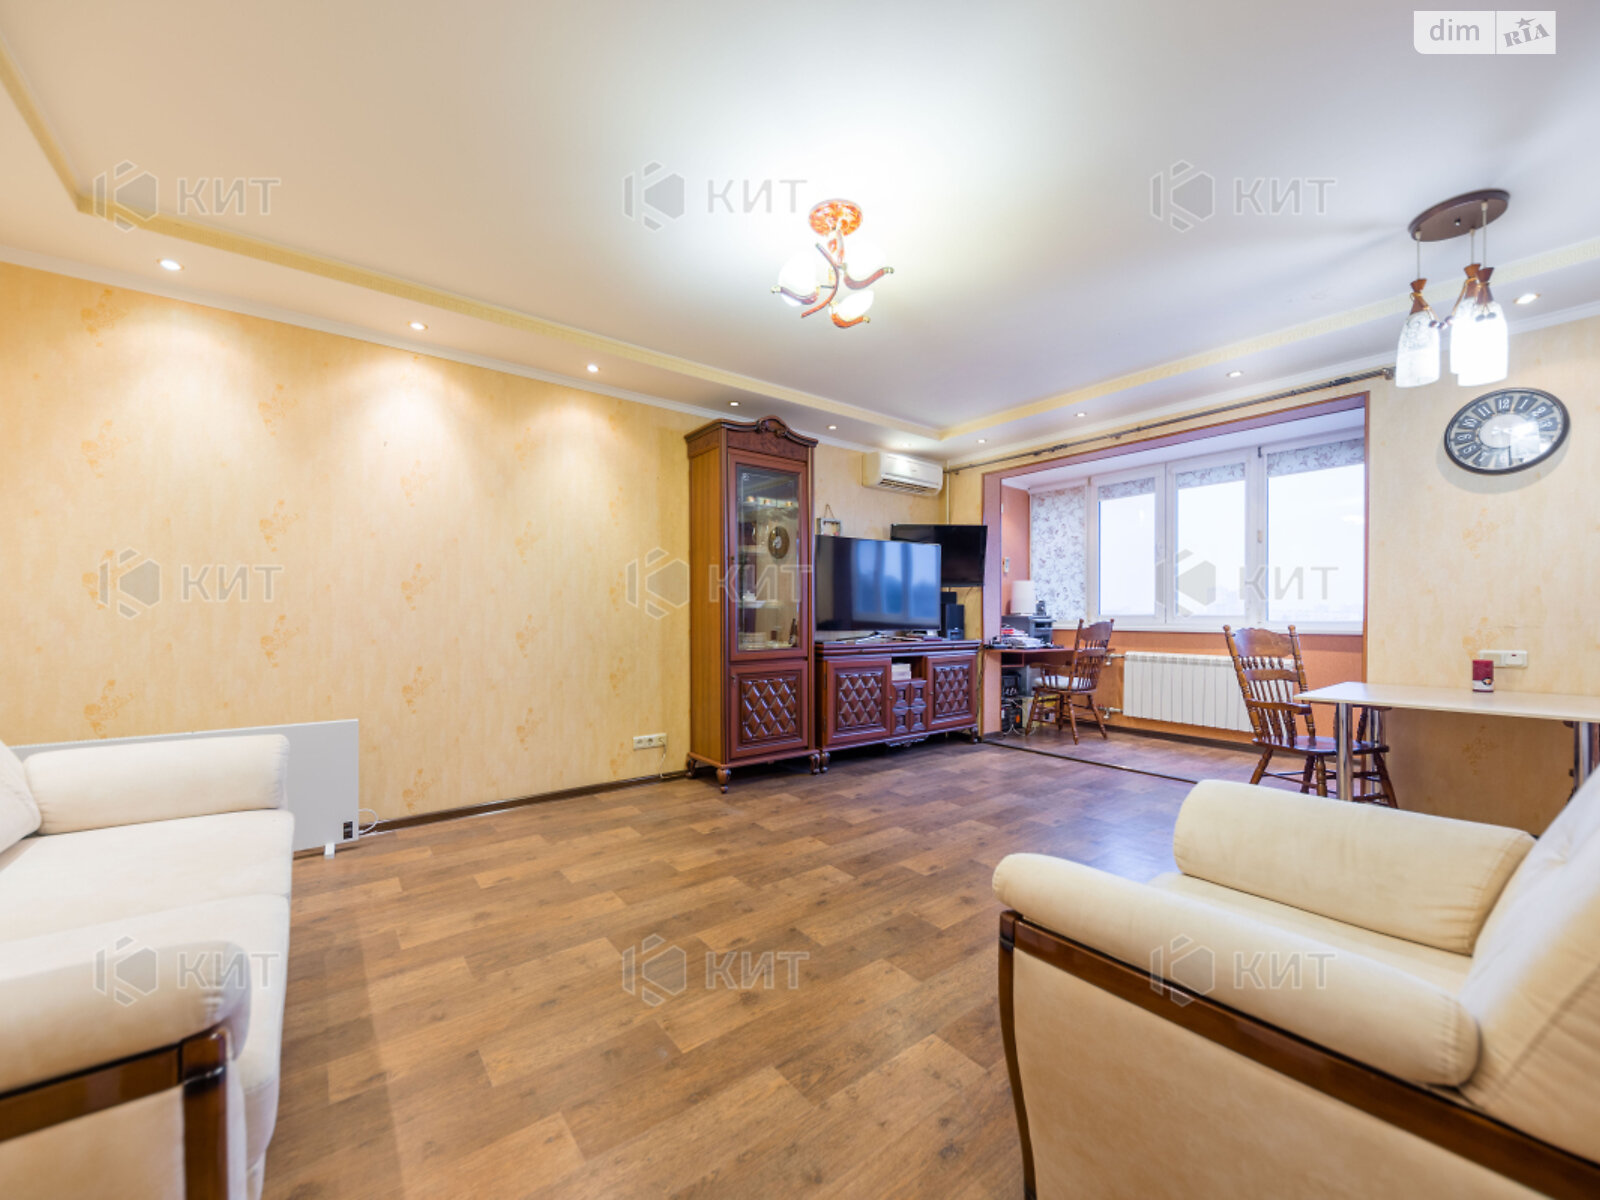 Продажа трехкомнатной квартиры в Харькове, на ул. Матюшенко 11, район Журавлевка фото 1